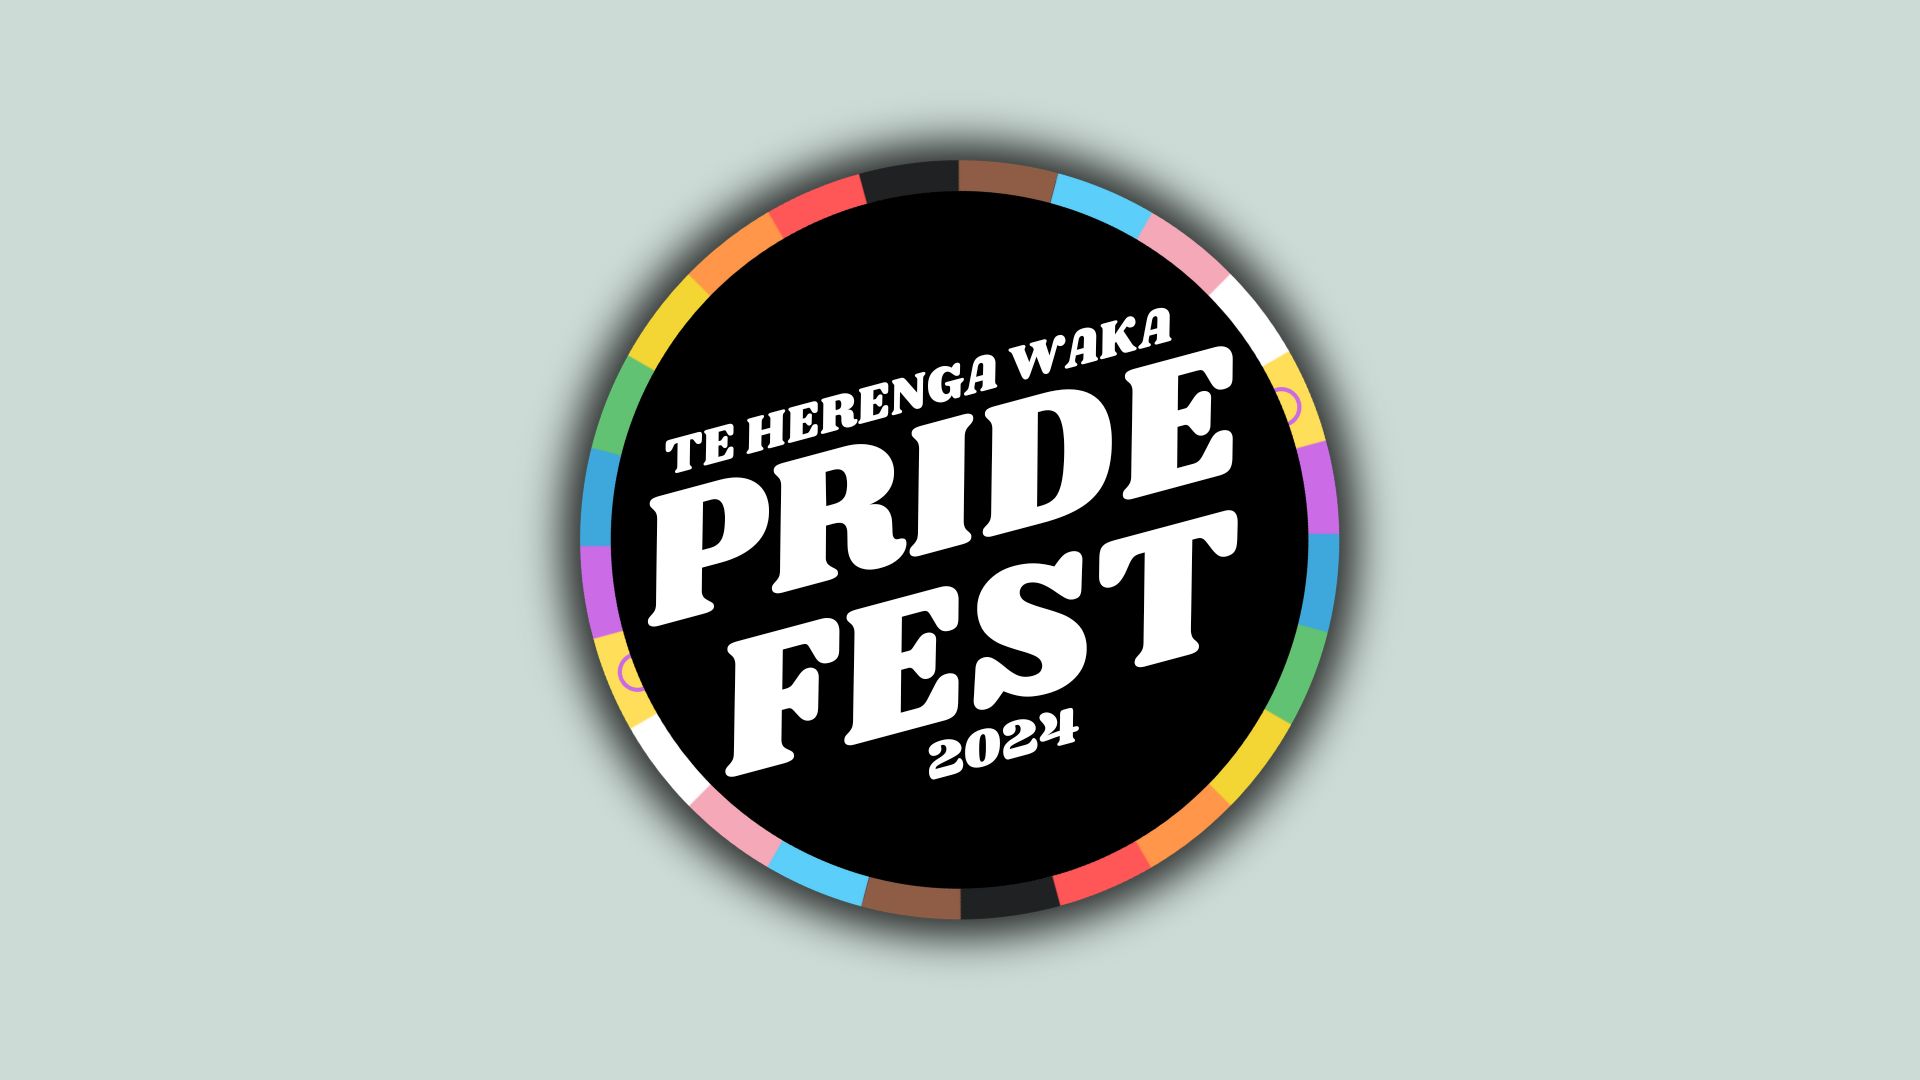 'Te Herenga Waka Pride Fest 2024' surrounded by an inclusive rainbow flag circular border